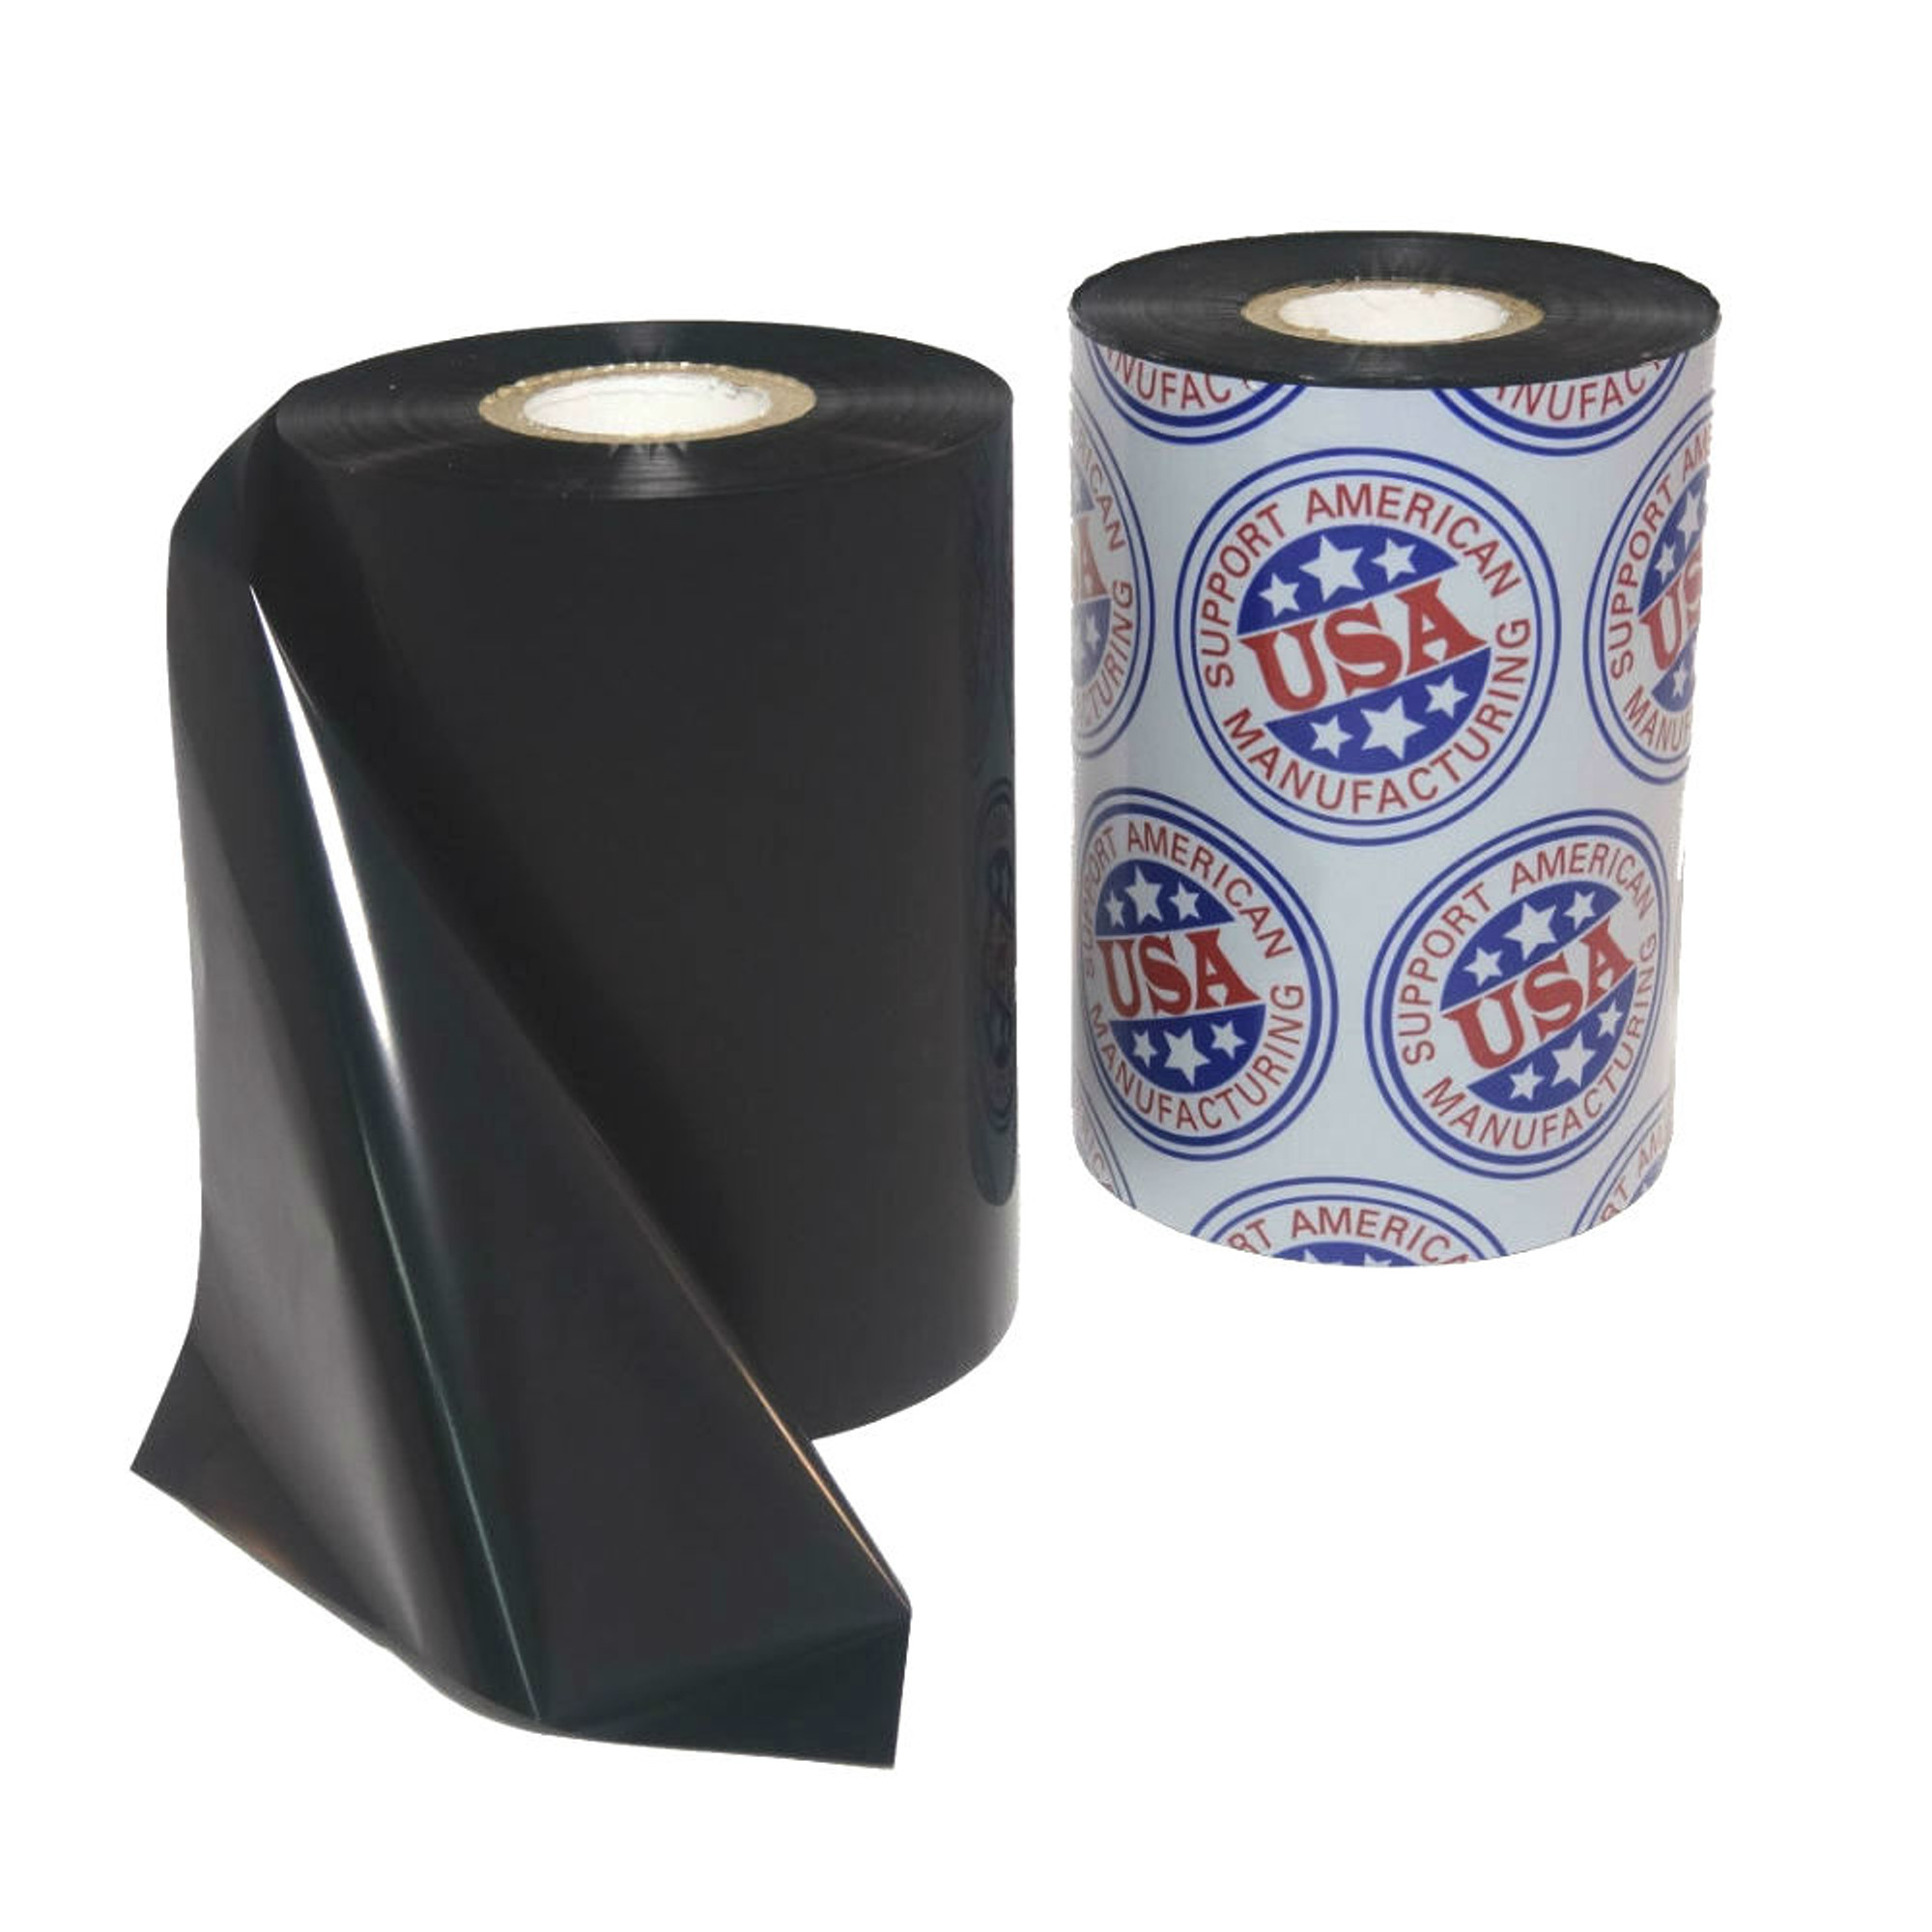 Wax Ribbon: 4.33" x 984' (110.0mm x 300m), Ink on Outside, Resin Enhanced,  $5.98 per Roll in 24 Roll Case Ganson Engineering